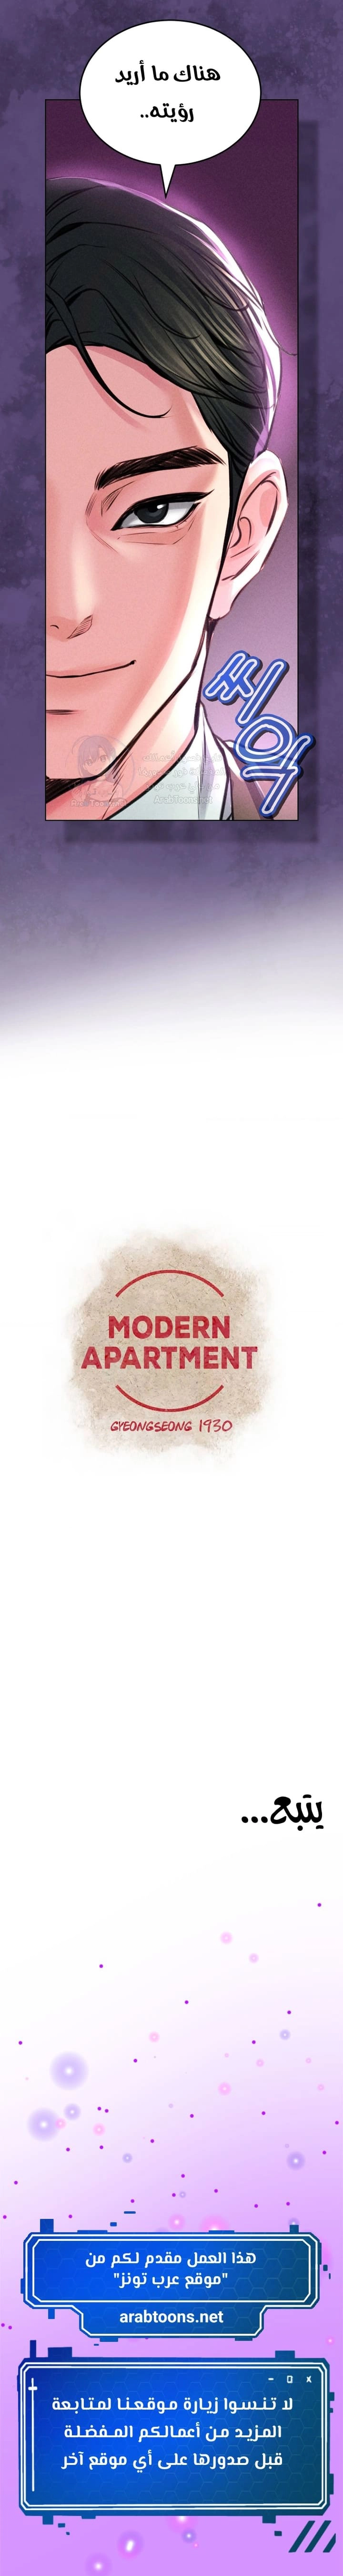 Modern Apartment, Gyeonseong 1930 - 9 - 663095f19af46.webp